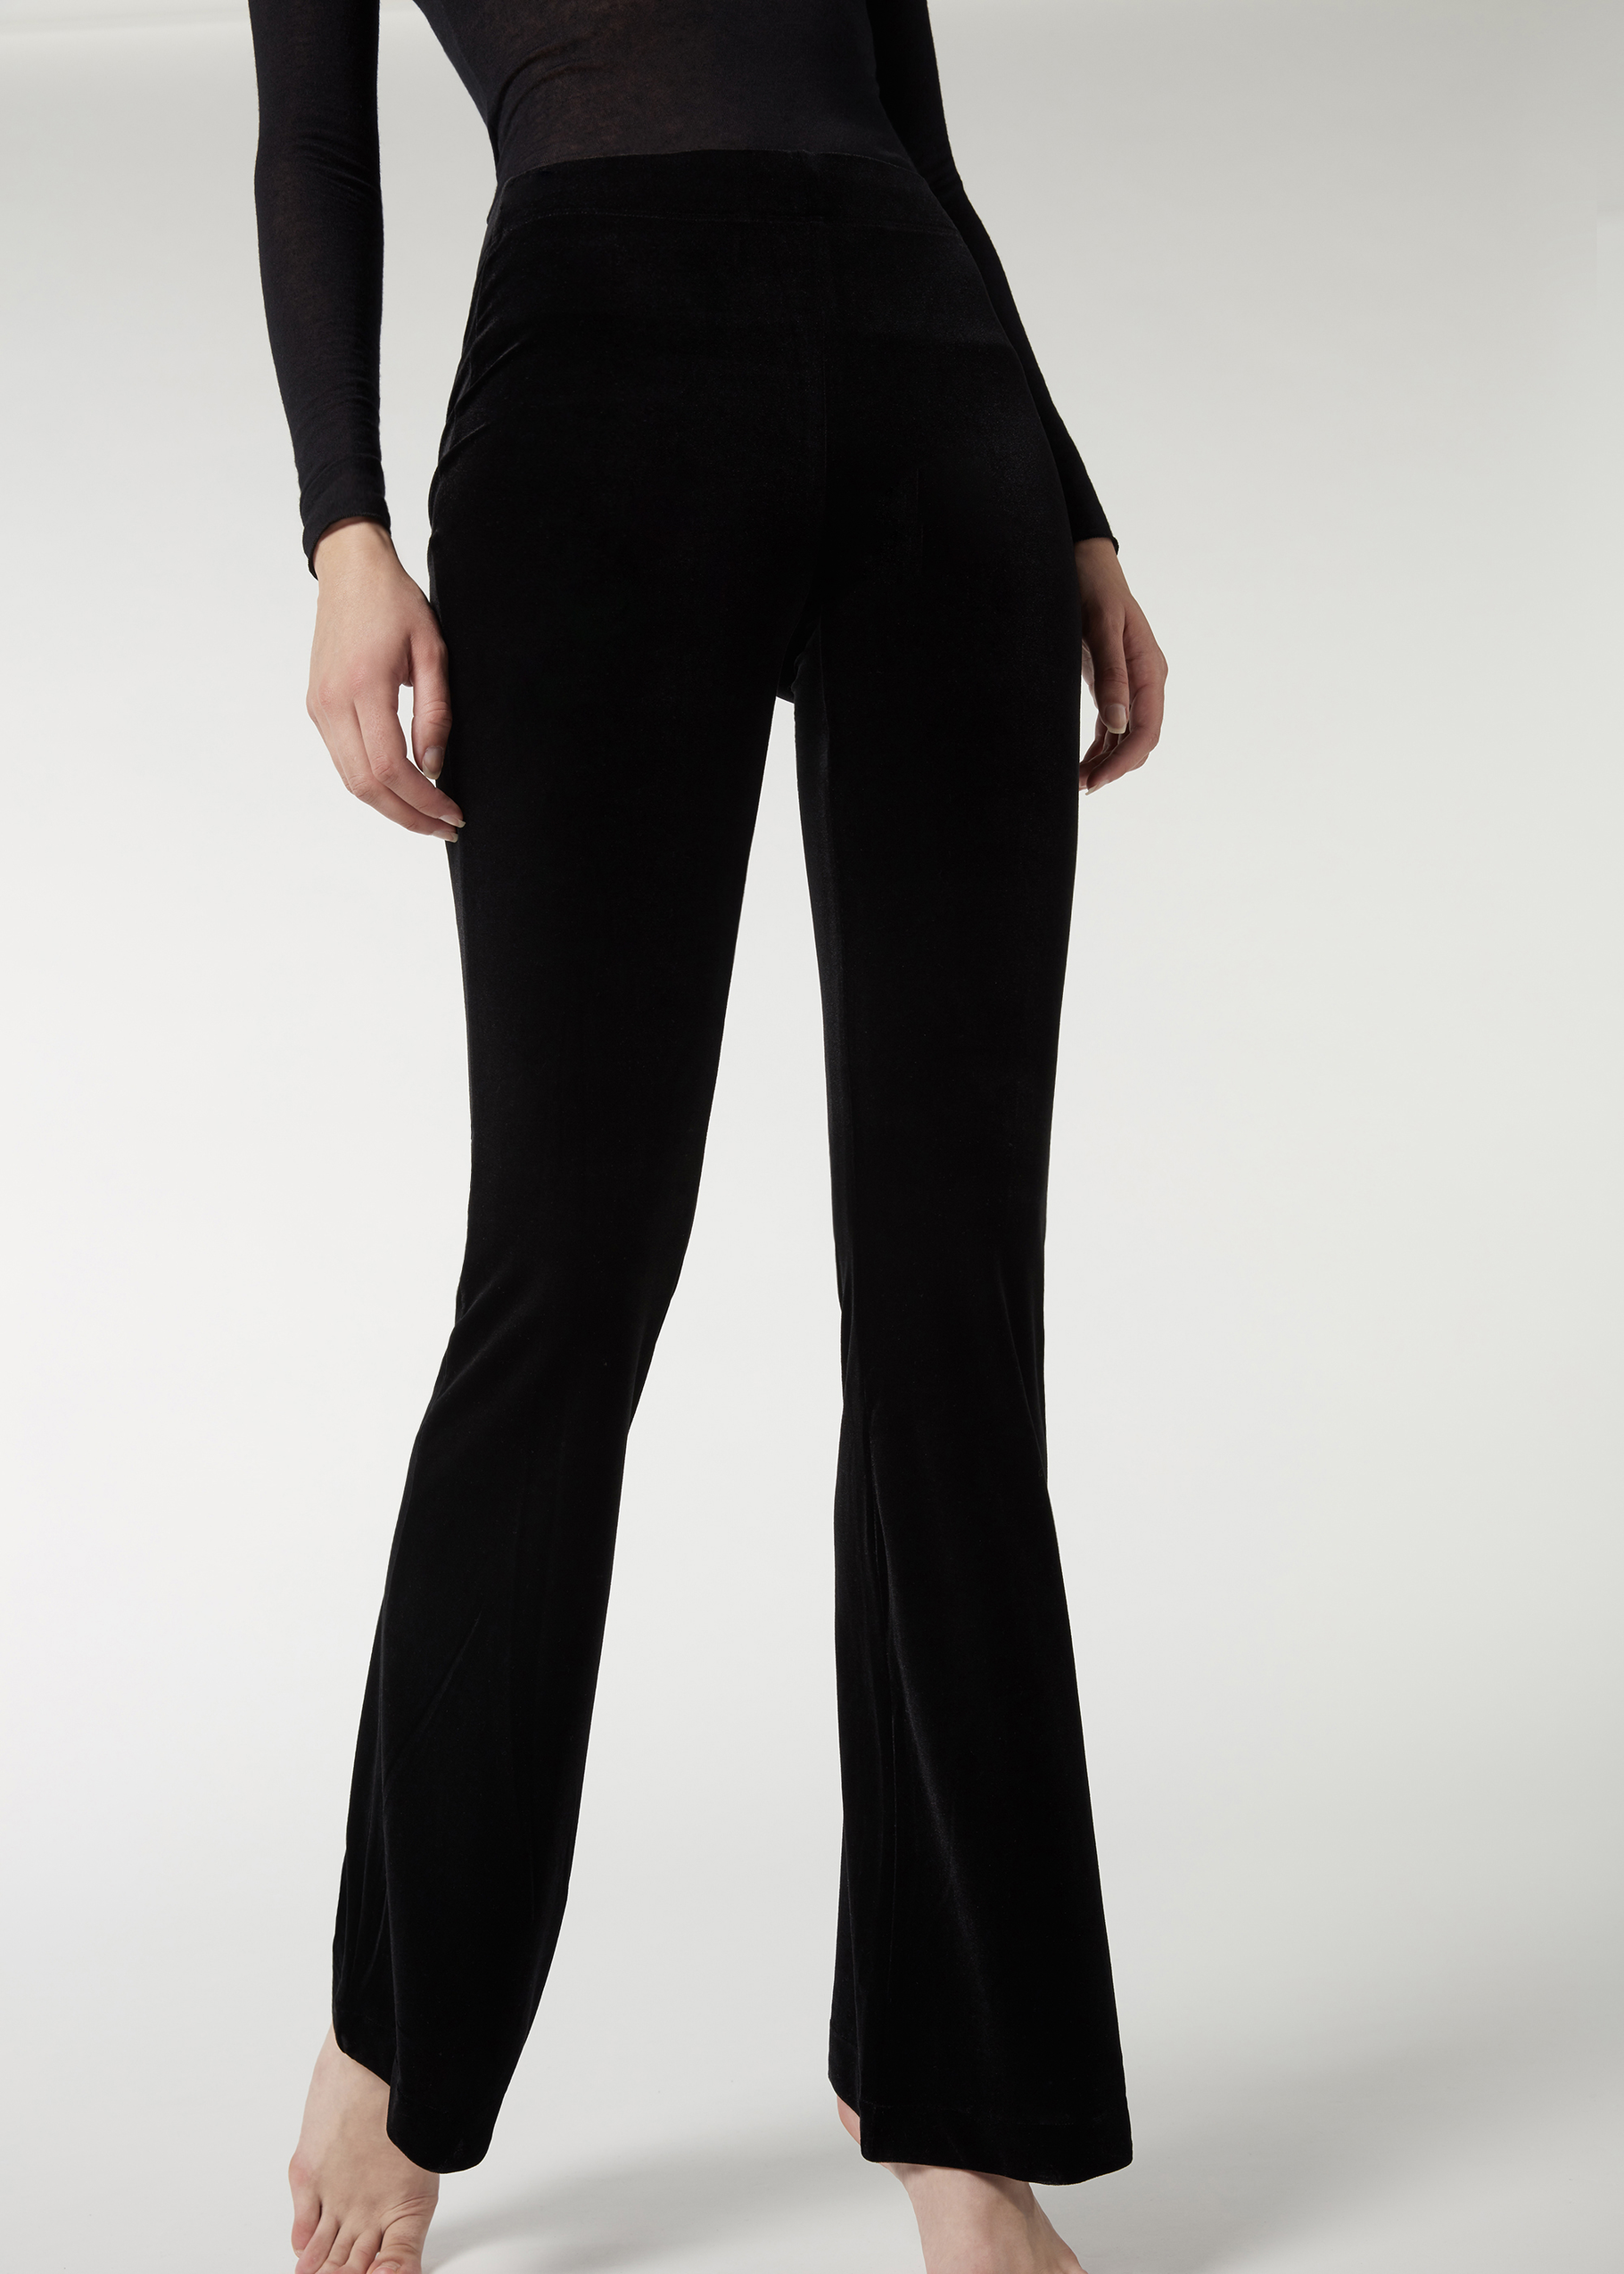 Calzedonia FLARED - Leggings - Trousers - black - Zalando.de